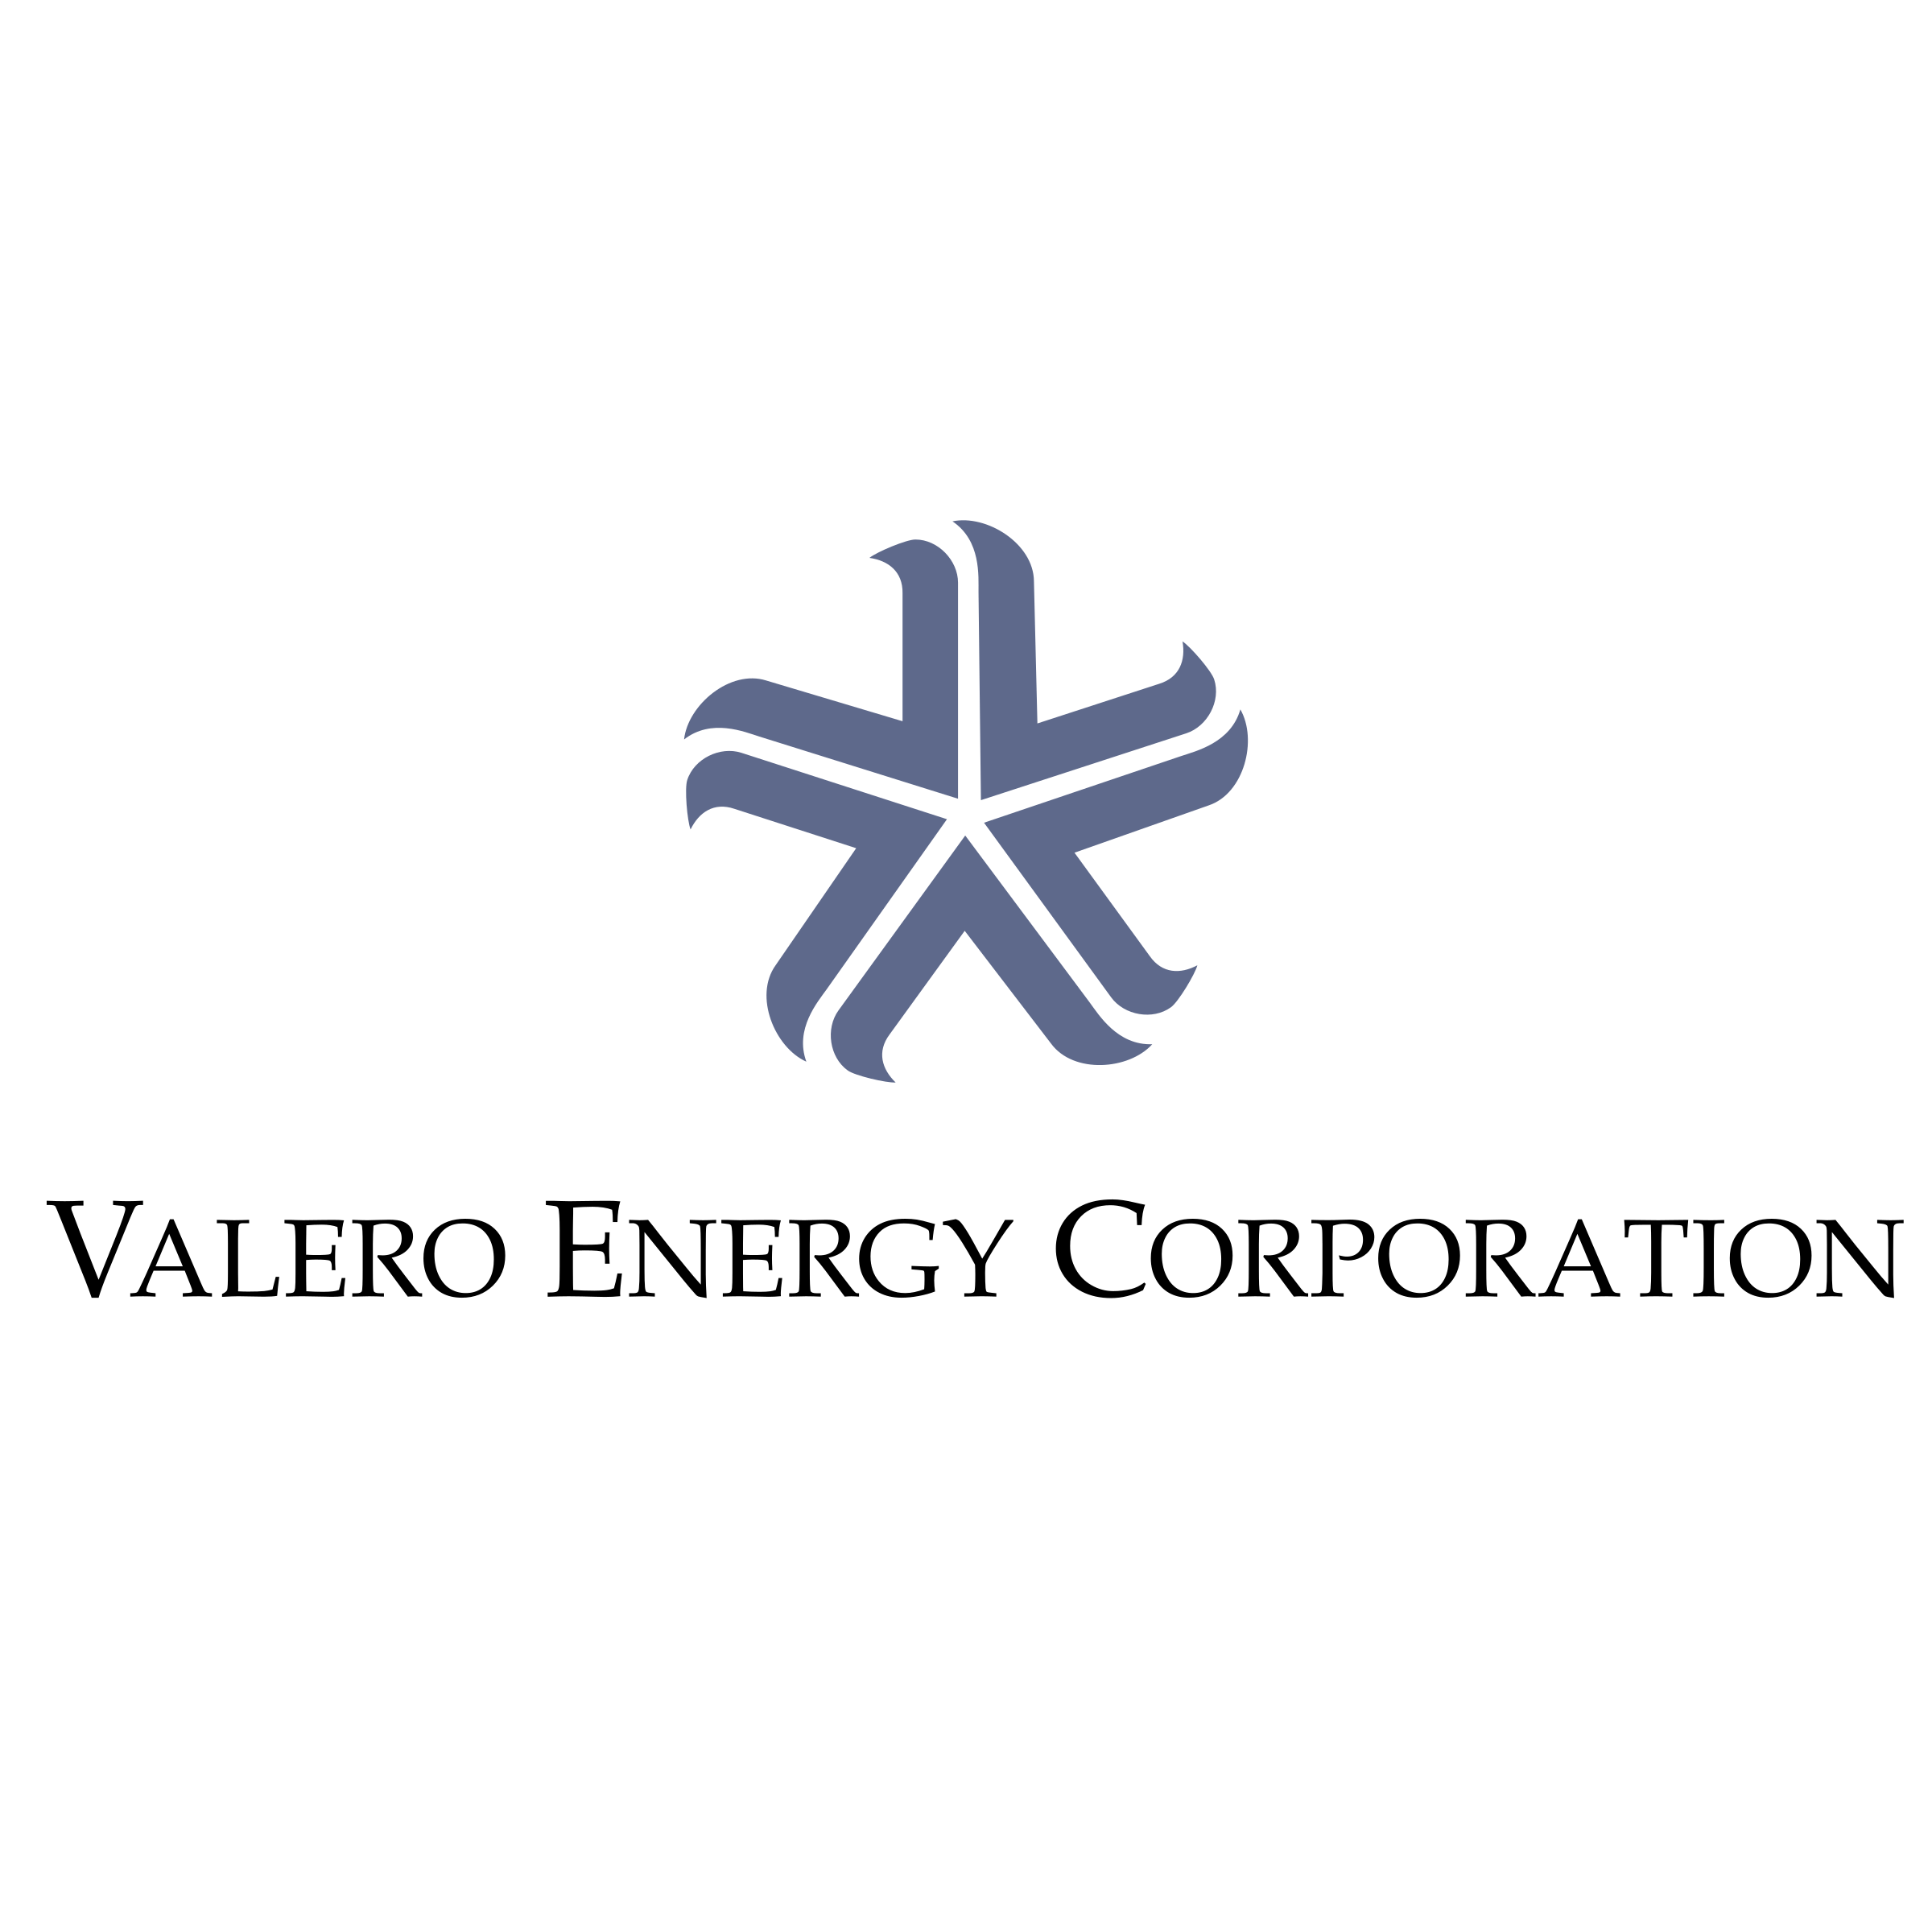 Valero Logo - Valero Energy Logo PNG Transparent & SVG Vector - Freebie Supply